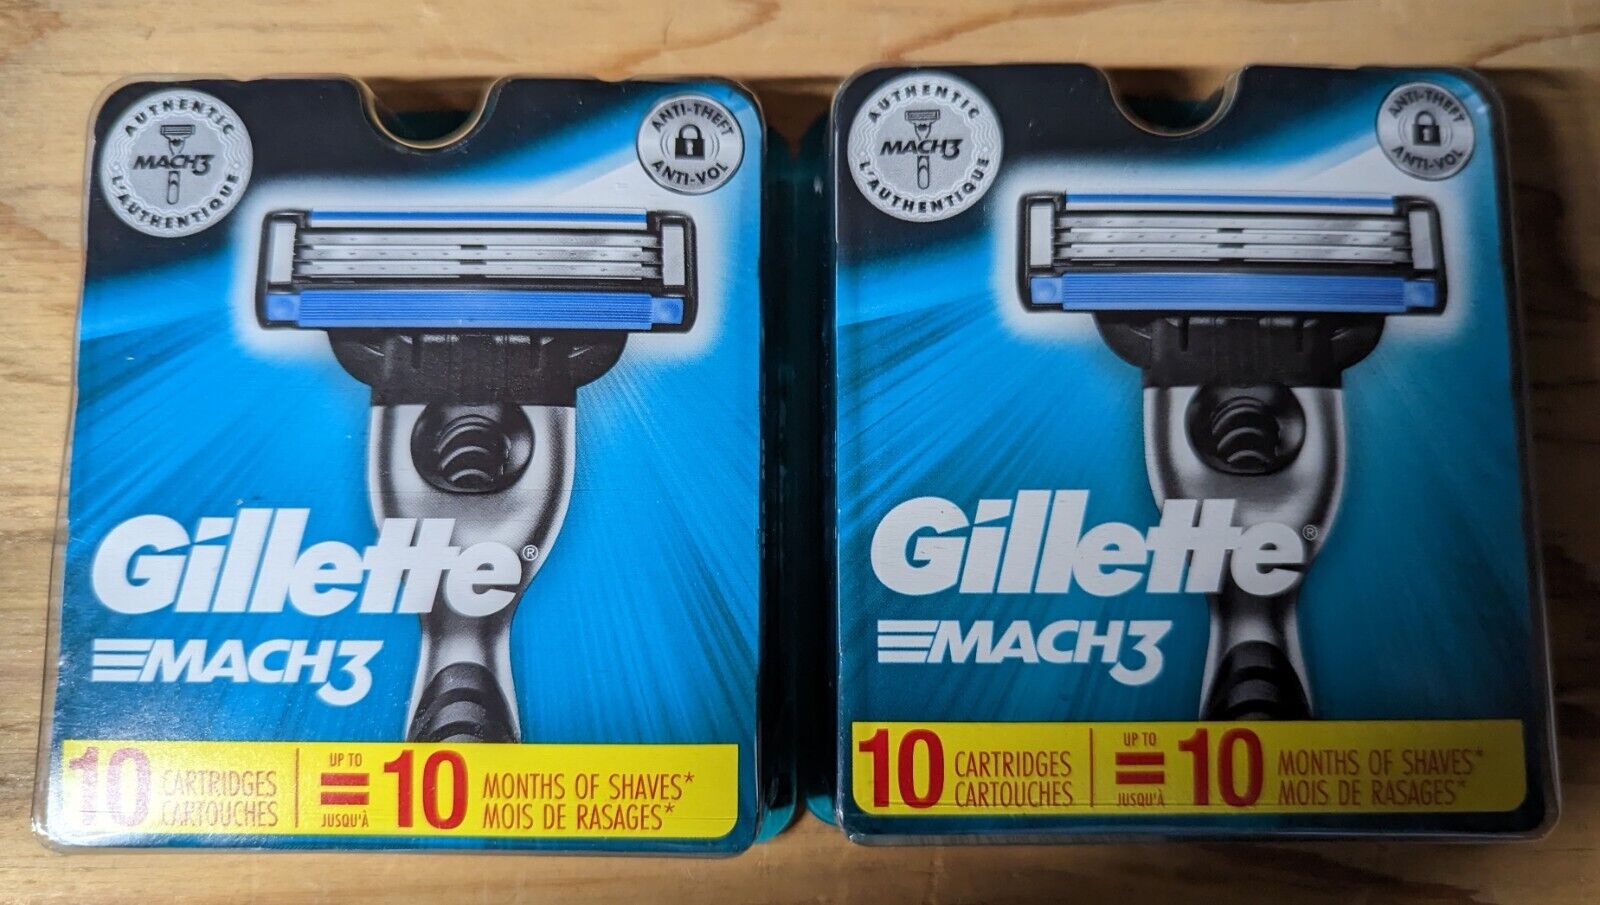 Gillette Mach3 Shaving Razors (20 Cartridges) Lot of 2 Packs 10 Each Total of 20 Gillette MACH3